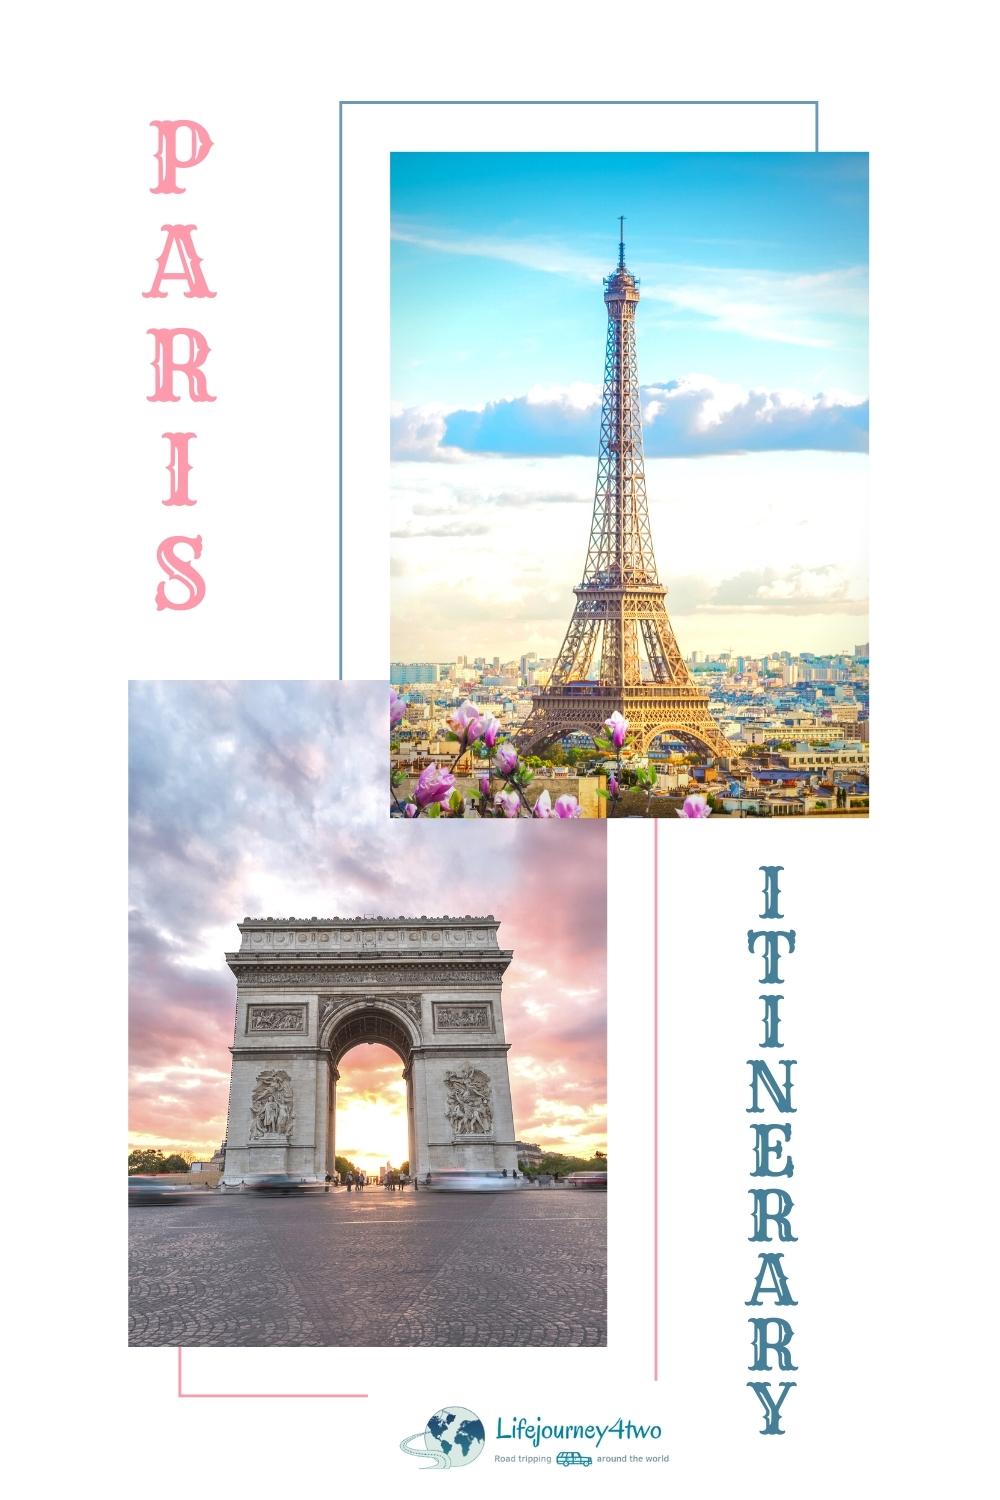 Paris 2 day itinerary pinterest pin